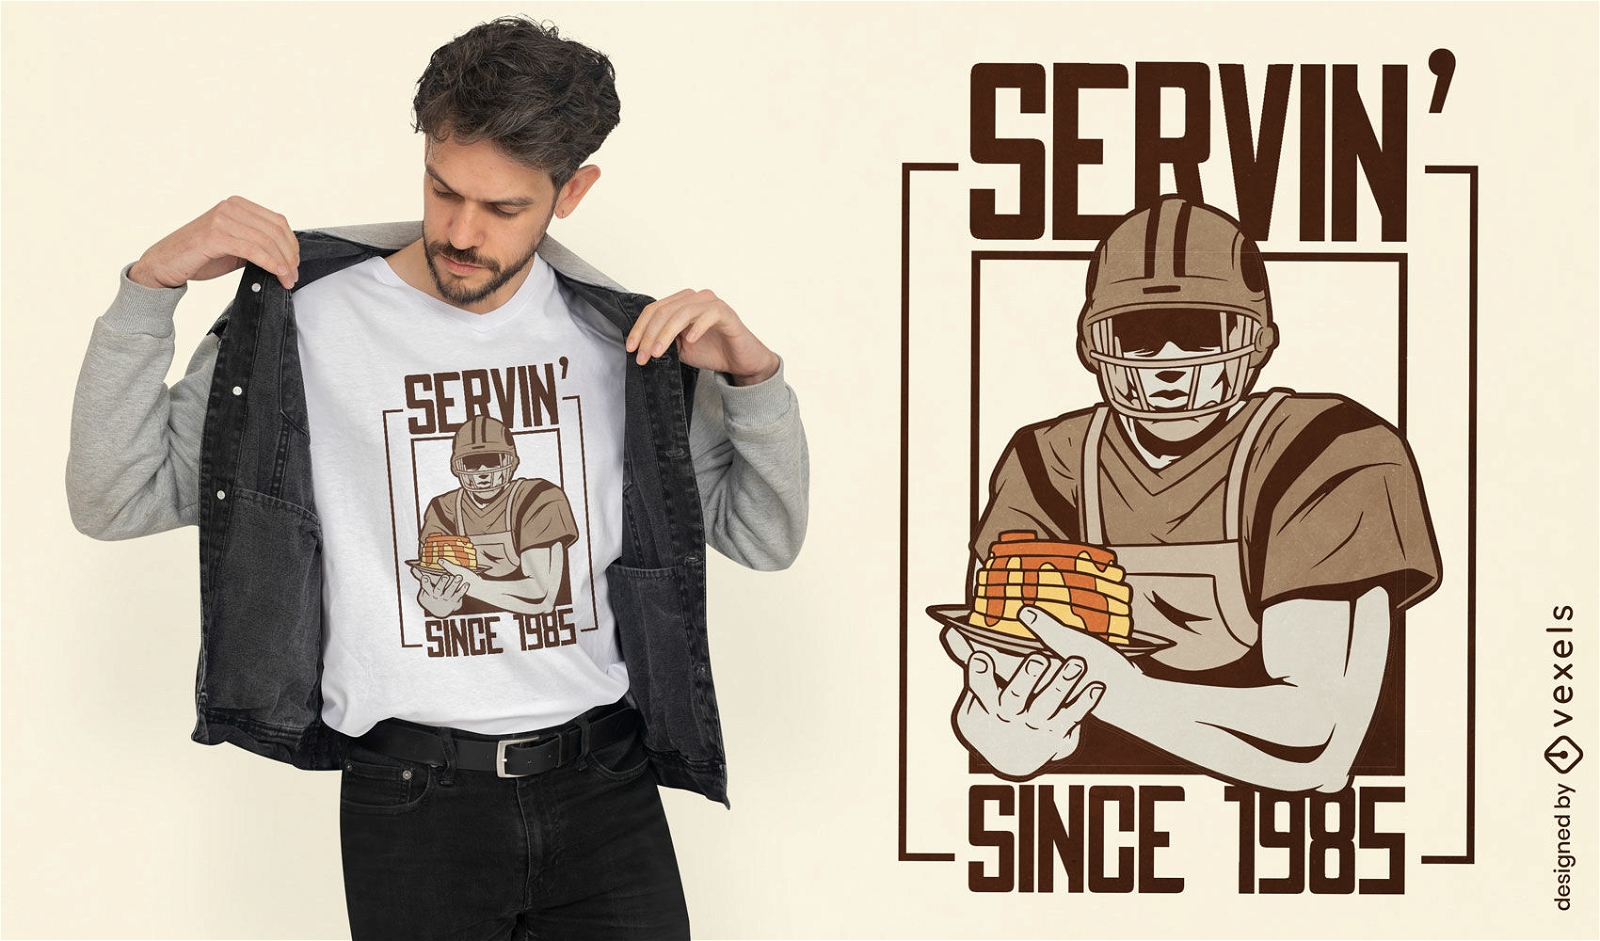 Football player serving pancakes t-shirt design